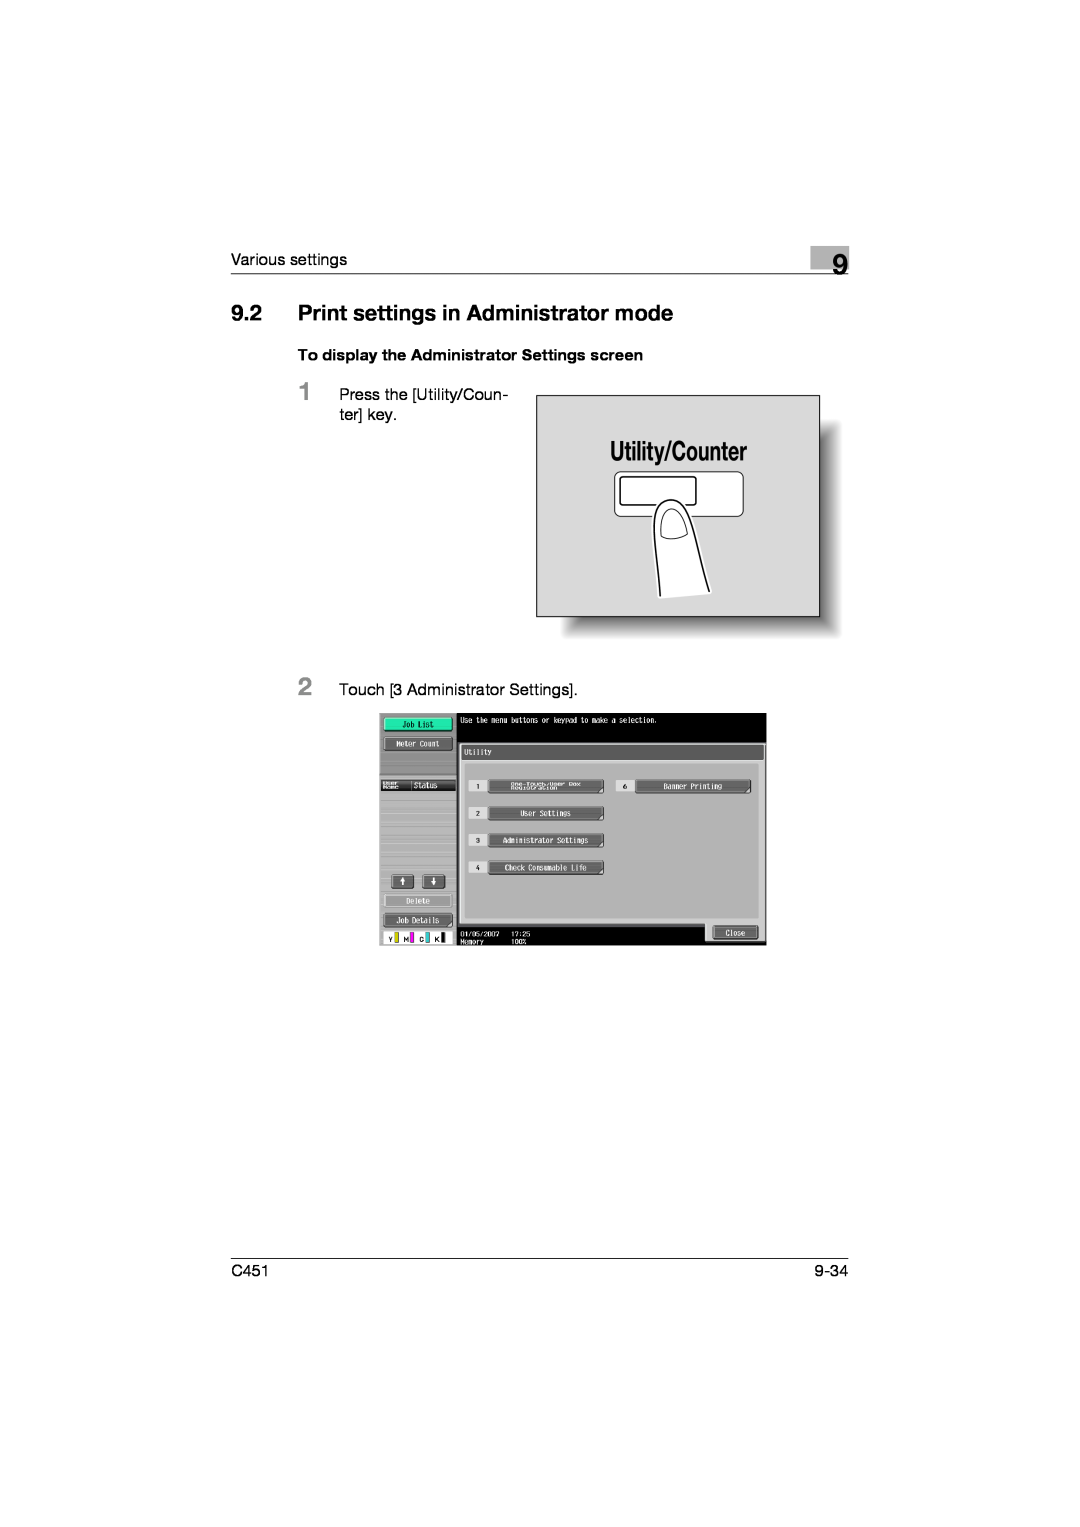 Konica Minolta C451 manual 9.2Print settings in Administrator mode, To display the Administrator Settings screen 